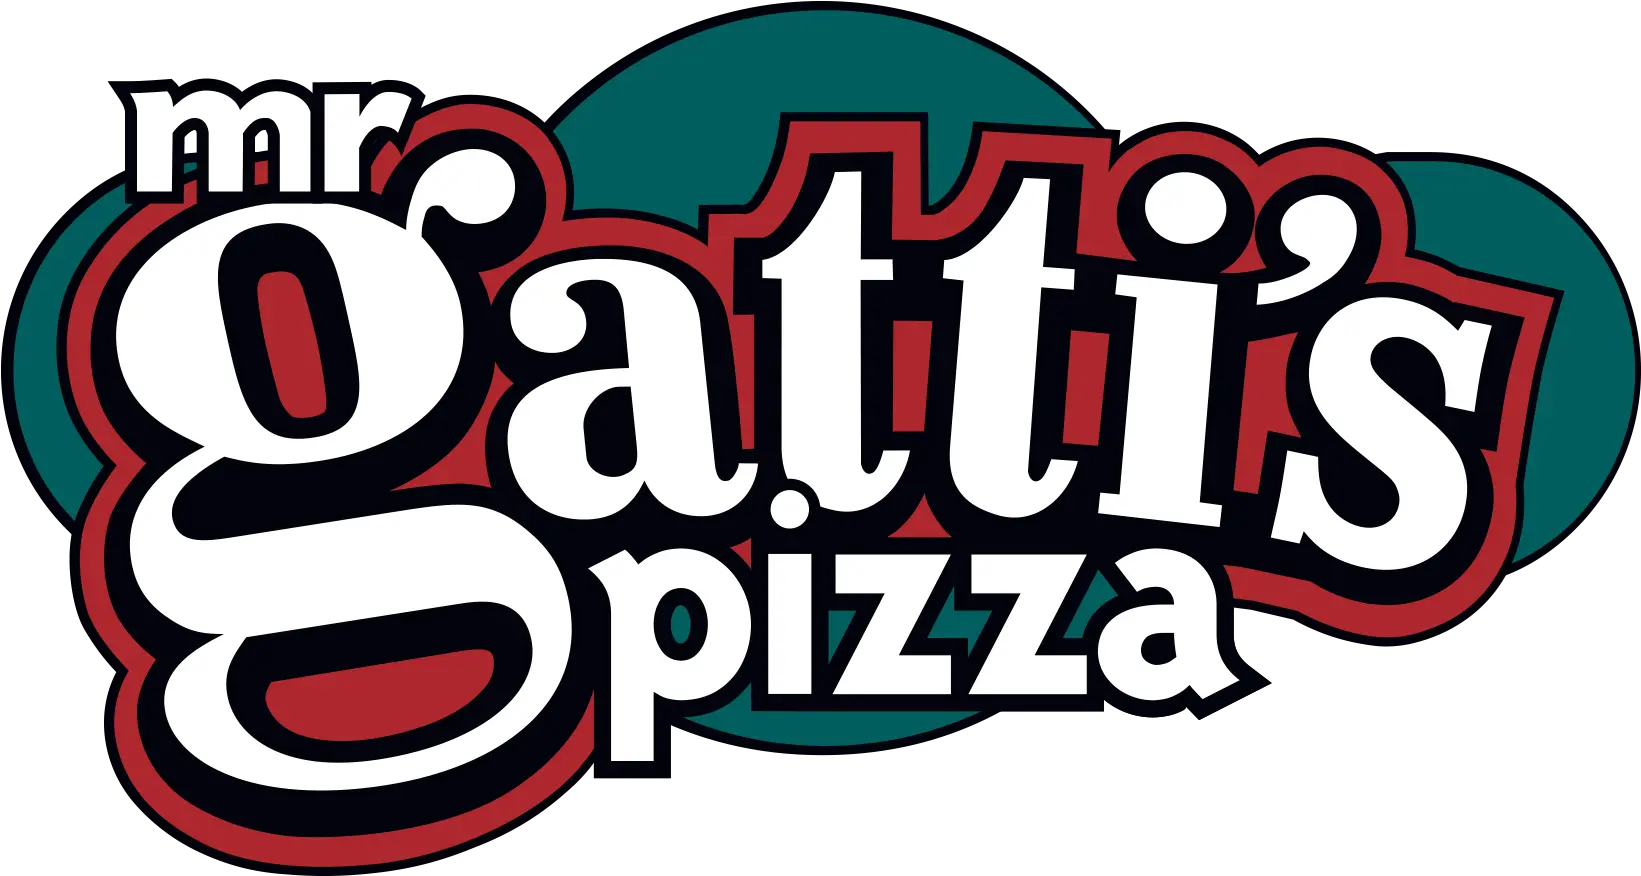 Download Join Us Gattiu0027s Pizza Full Size Png Image Mr Gattis Logo Join Us Png